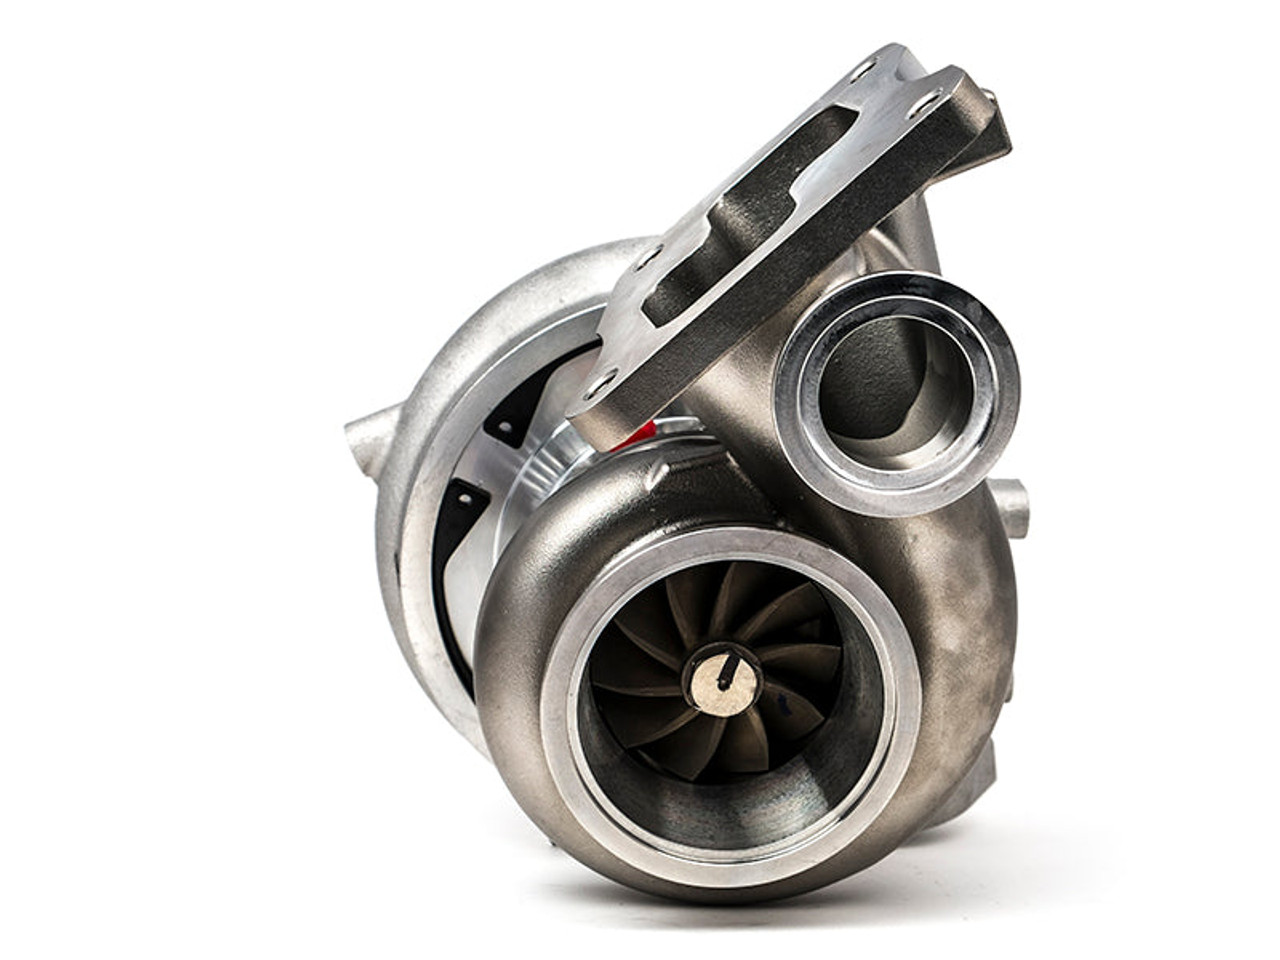 Forced Performance ZERO Ball Bearing Turbocharger for EVO IX